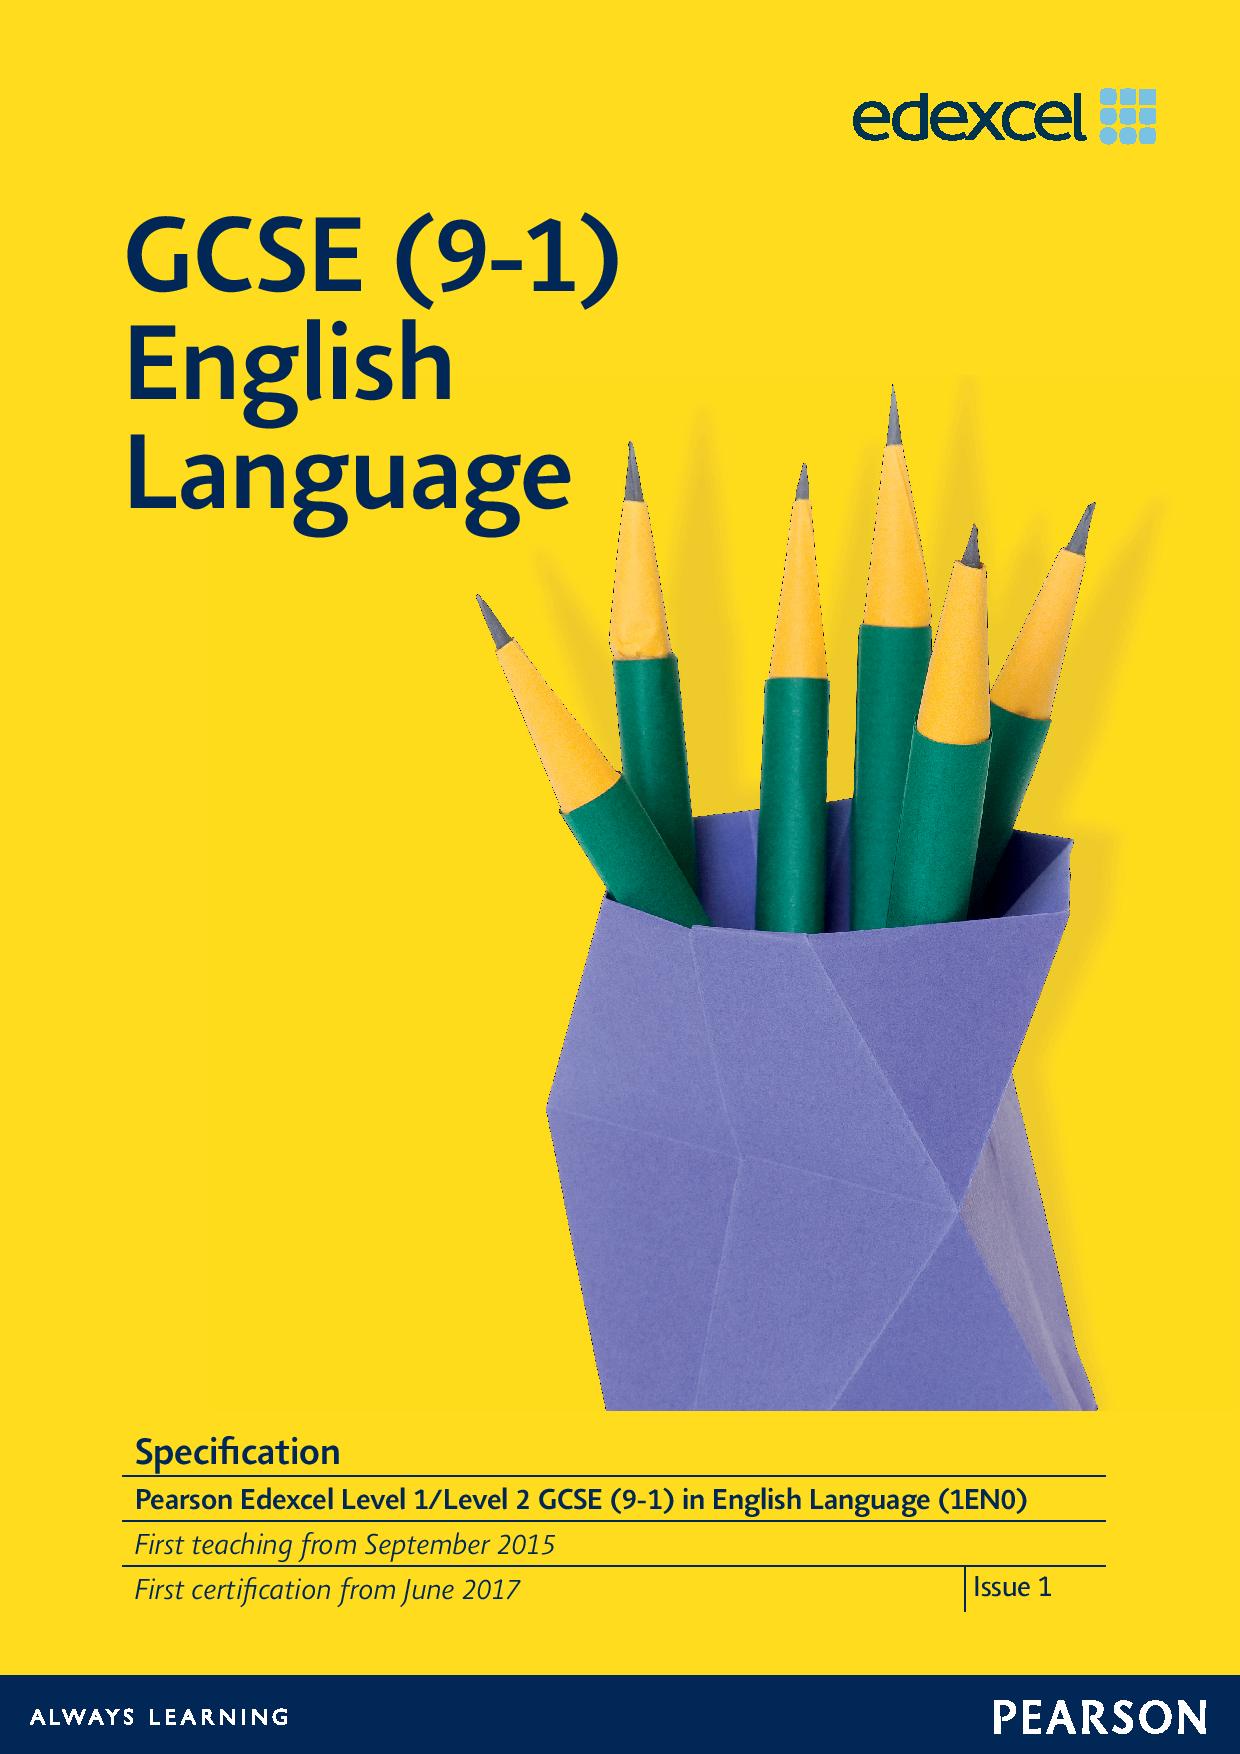 gcse-english-comprehension-worksheets-pdf-pauline-carl-s-3rd-grade-math-worksheets